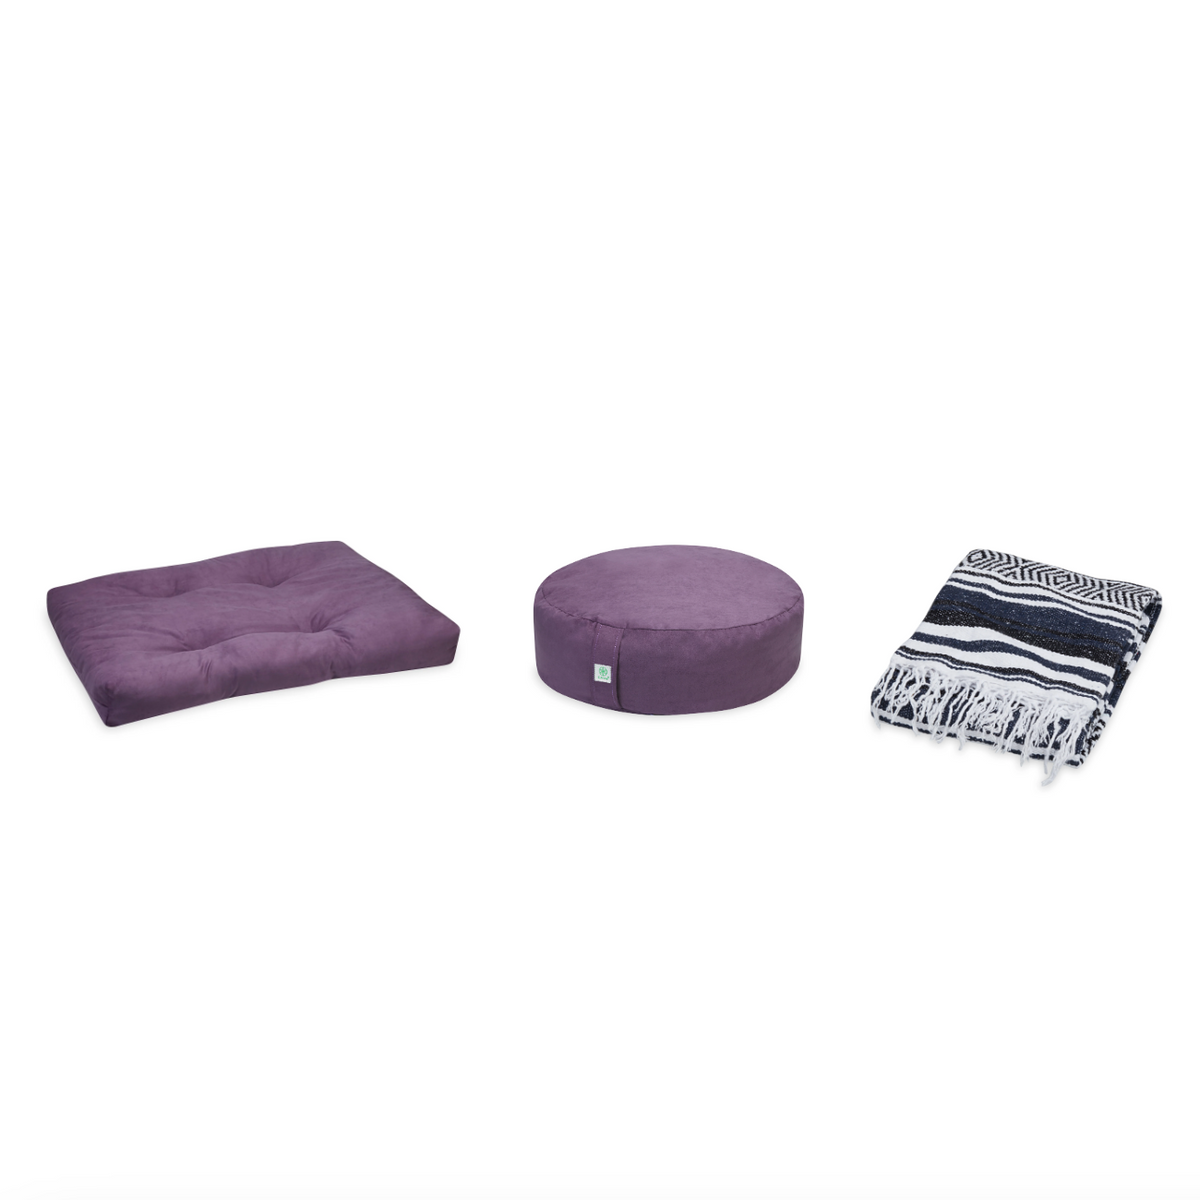 Meditation Bundle - Zabuton (Purple), Zafu (Purple), Blanket (Black/Navy)